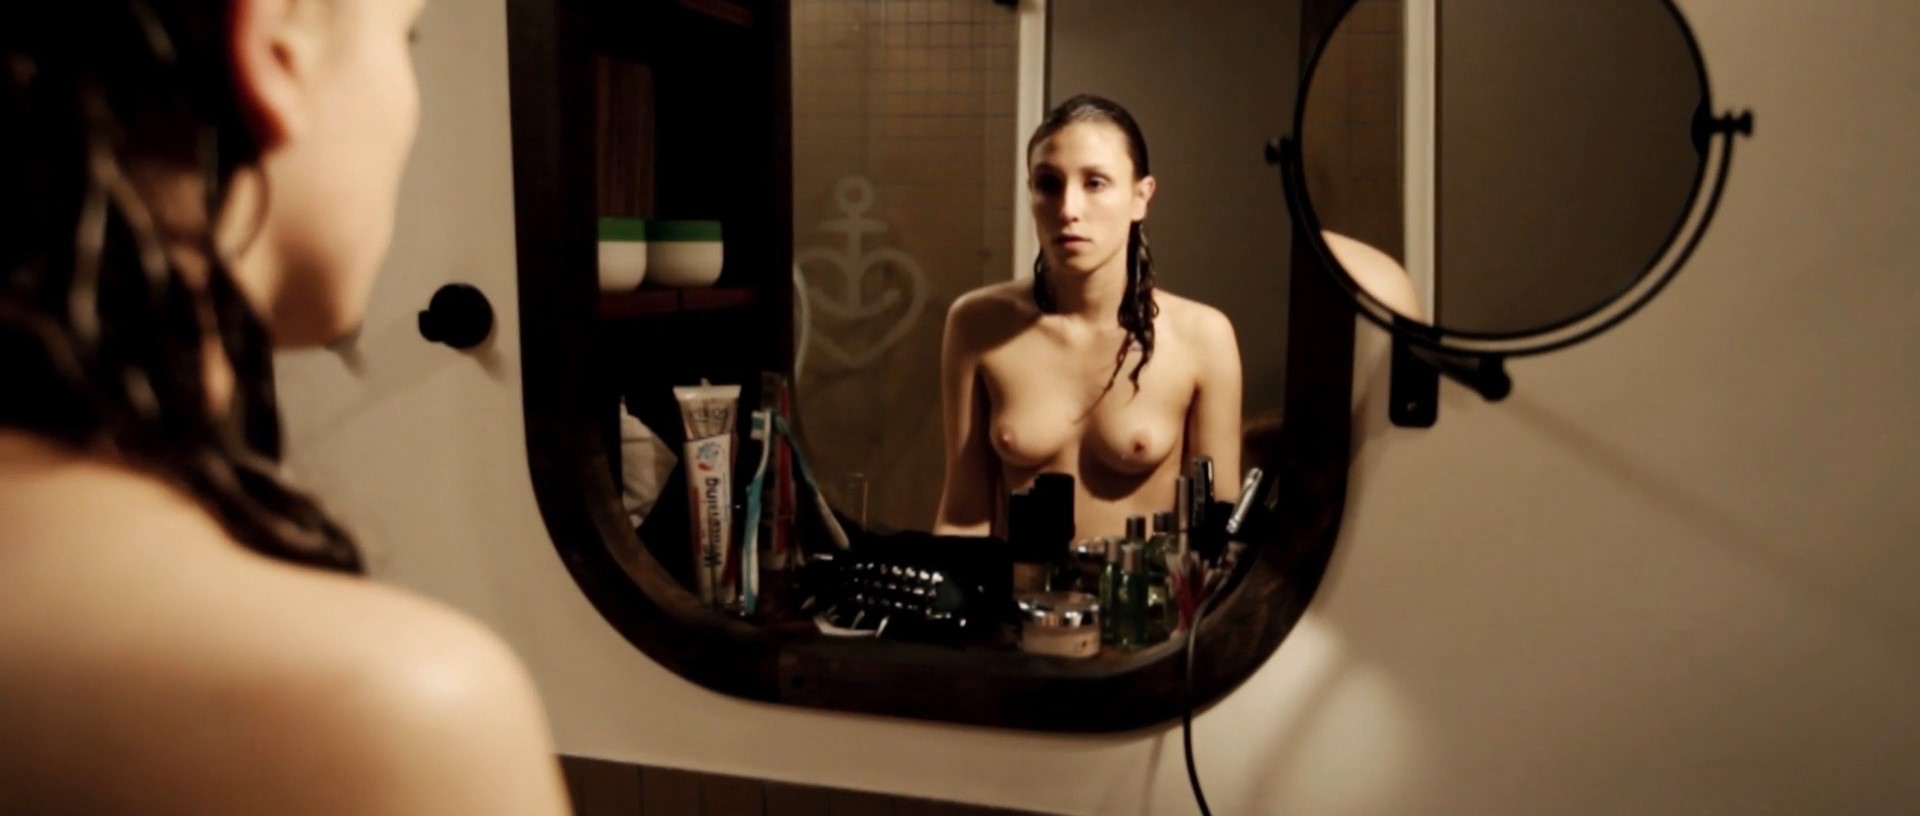 Lena Steisslinger - Roulette (2013) HD 1080p